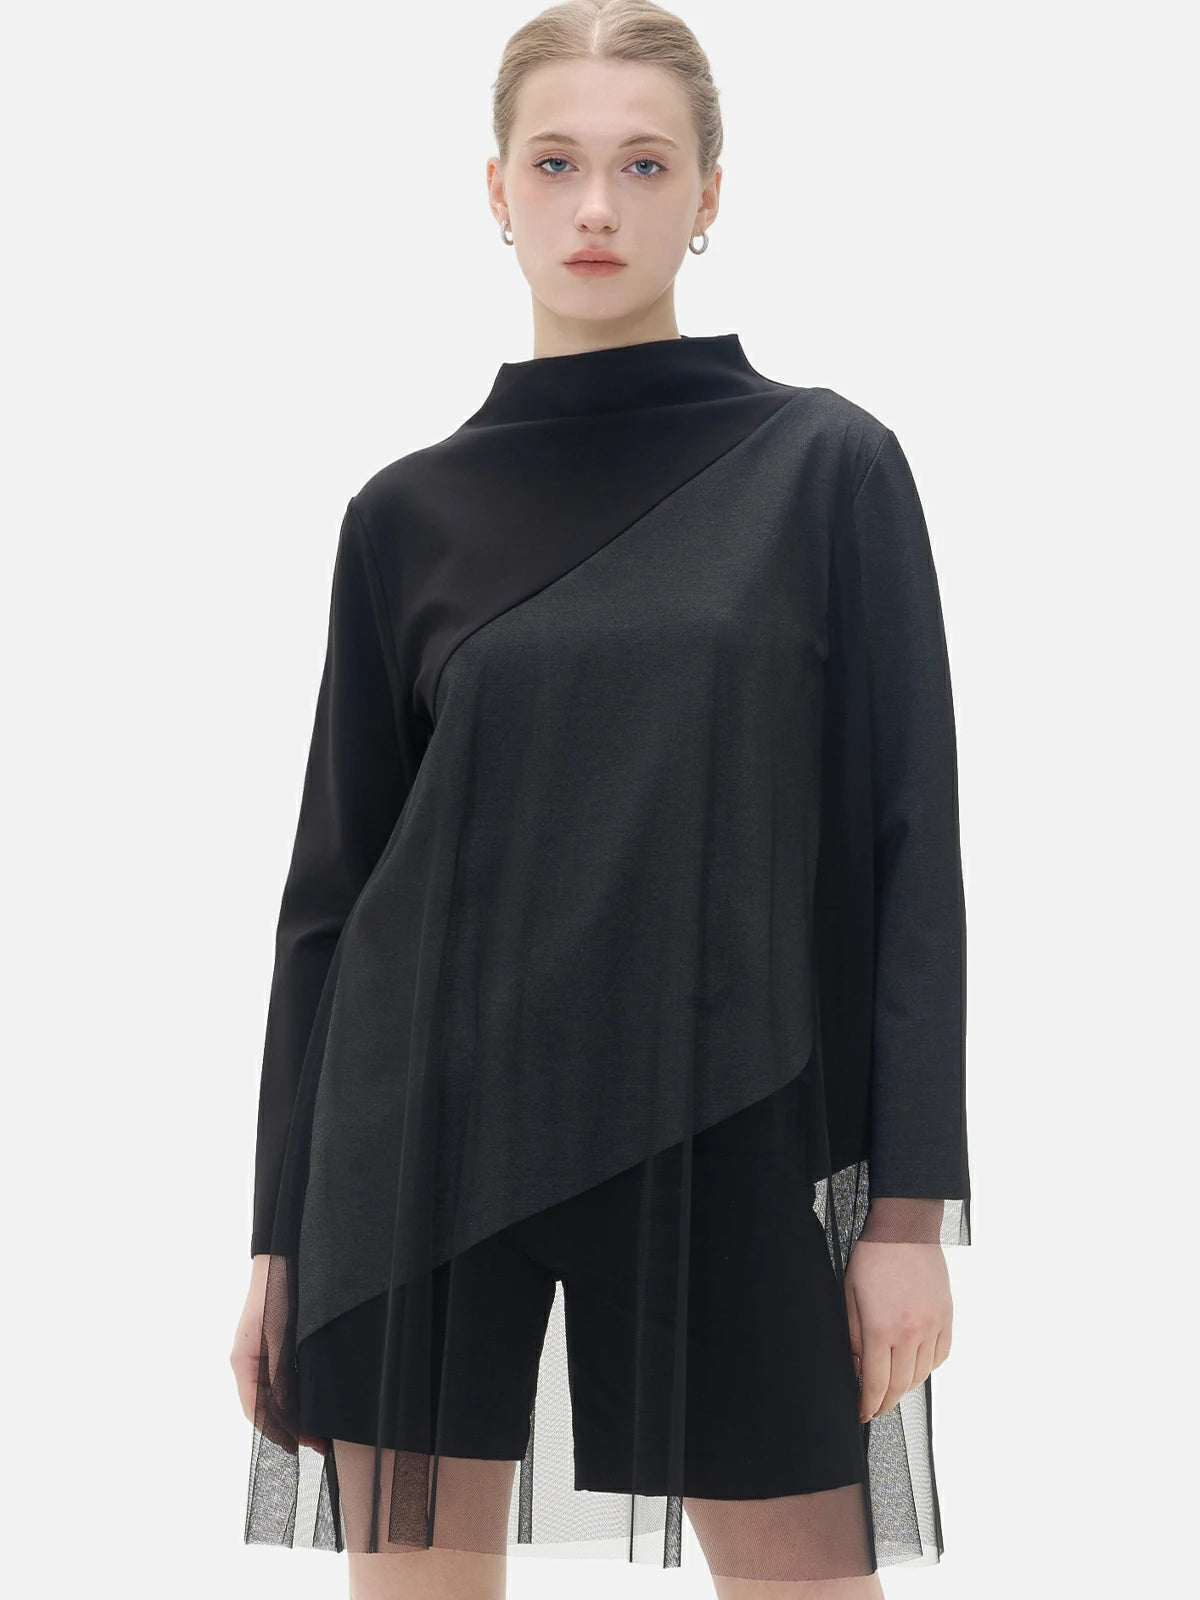 Stylish half-high collar women's black-gray color block top